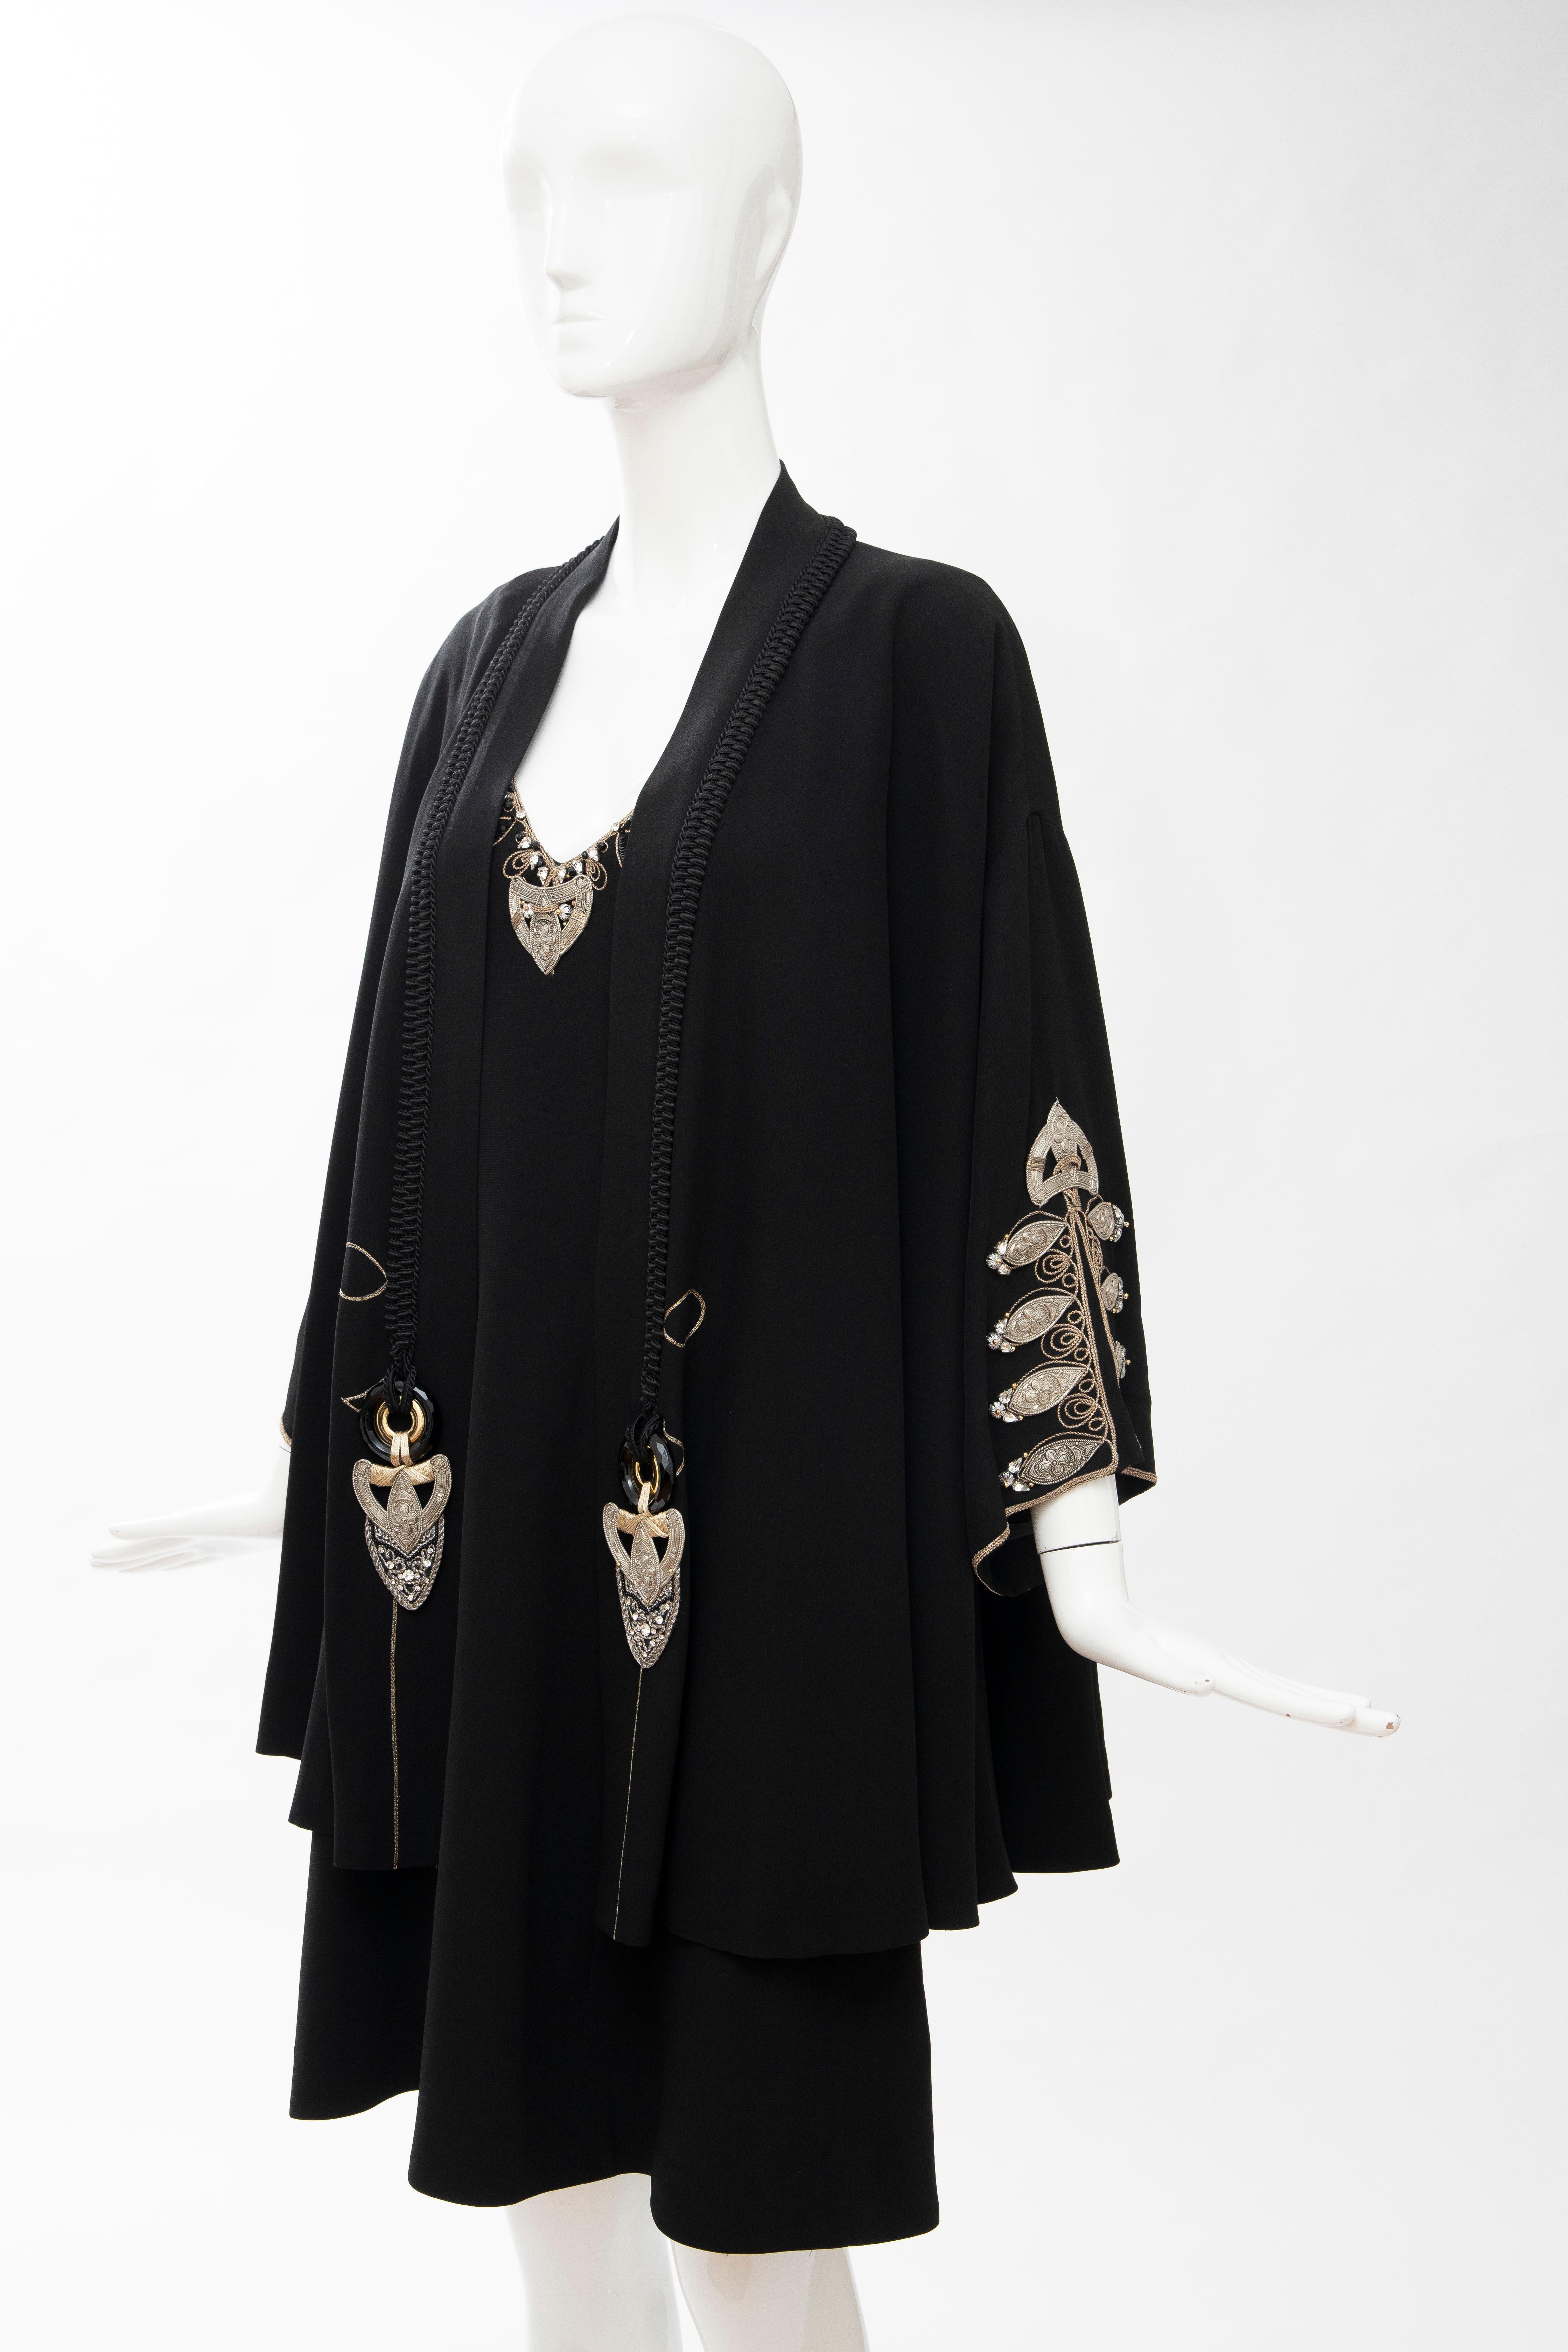 Christian Dior Gianfranco Ferré Numbered Black Embroidered Dress Ensemble, 1991 8